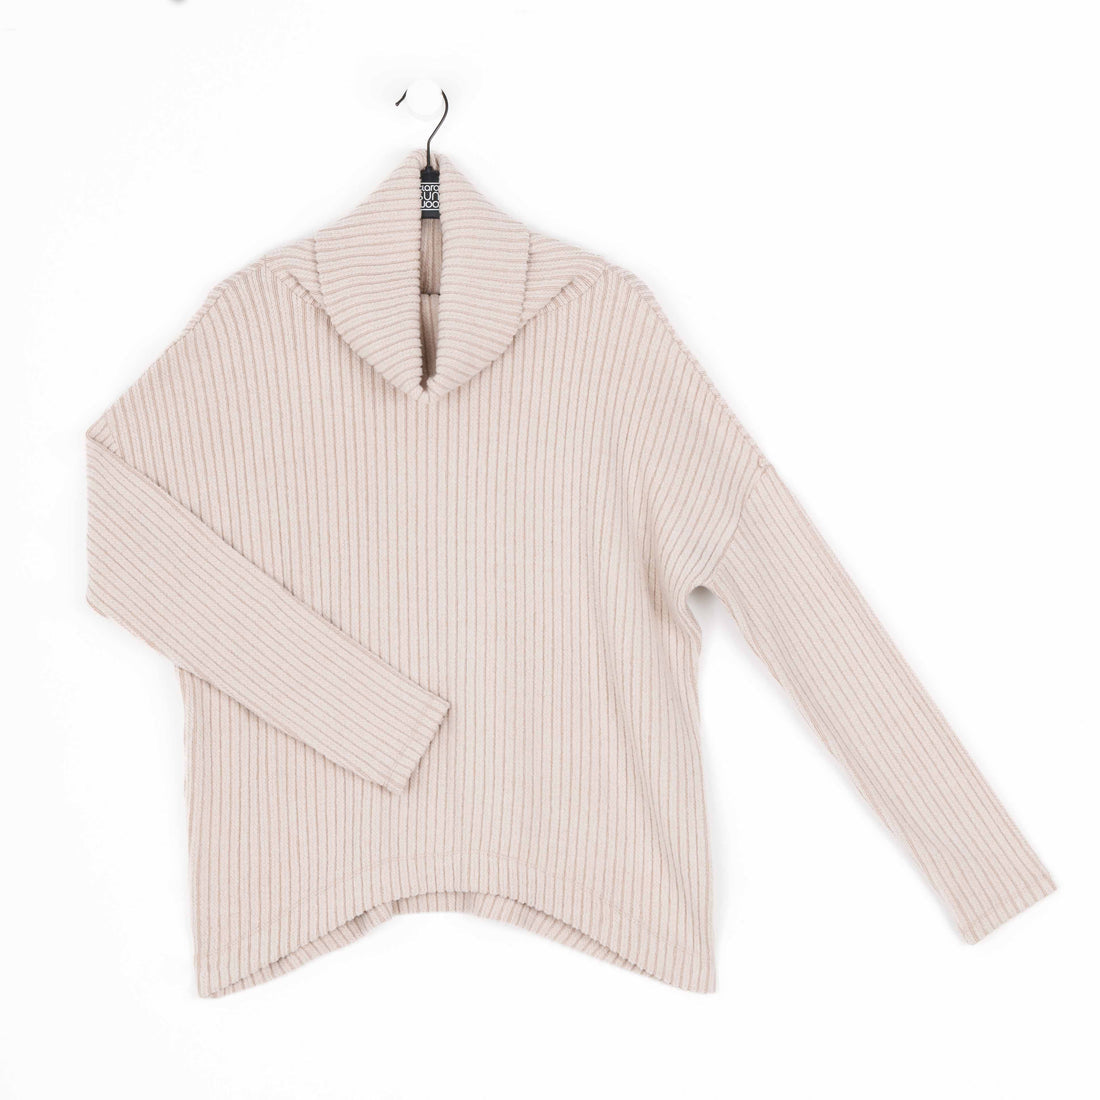 Sand Cowl Neck Chenille Sweater - FINAL SALE